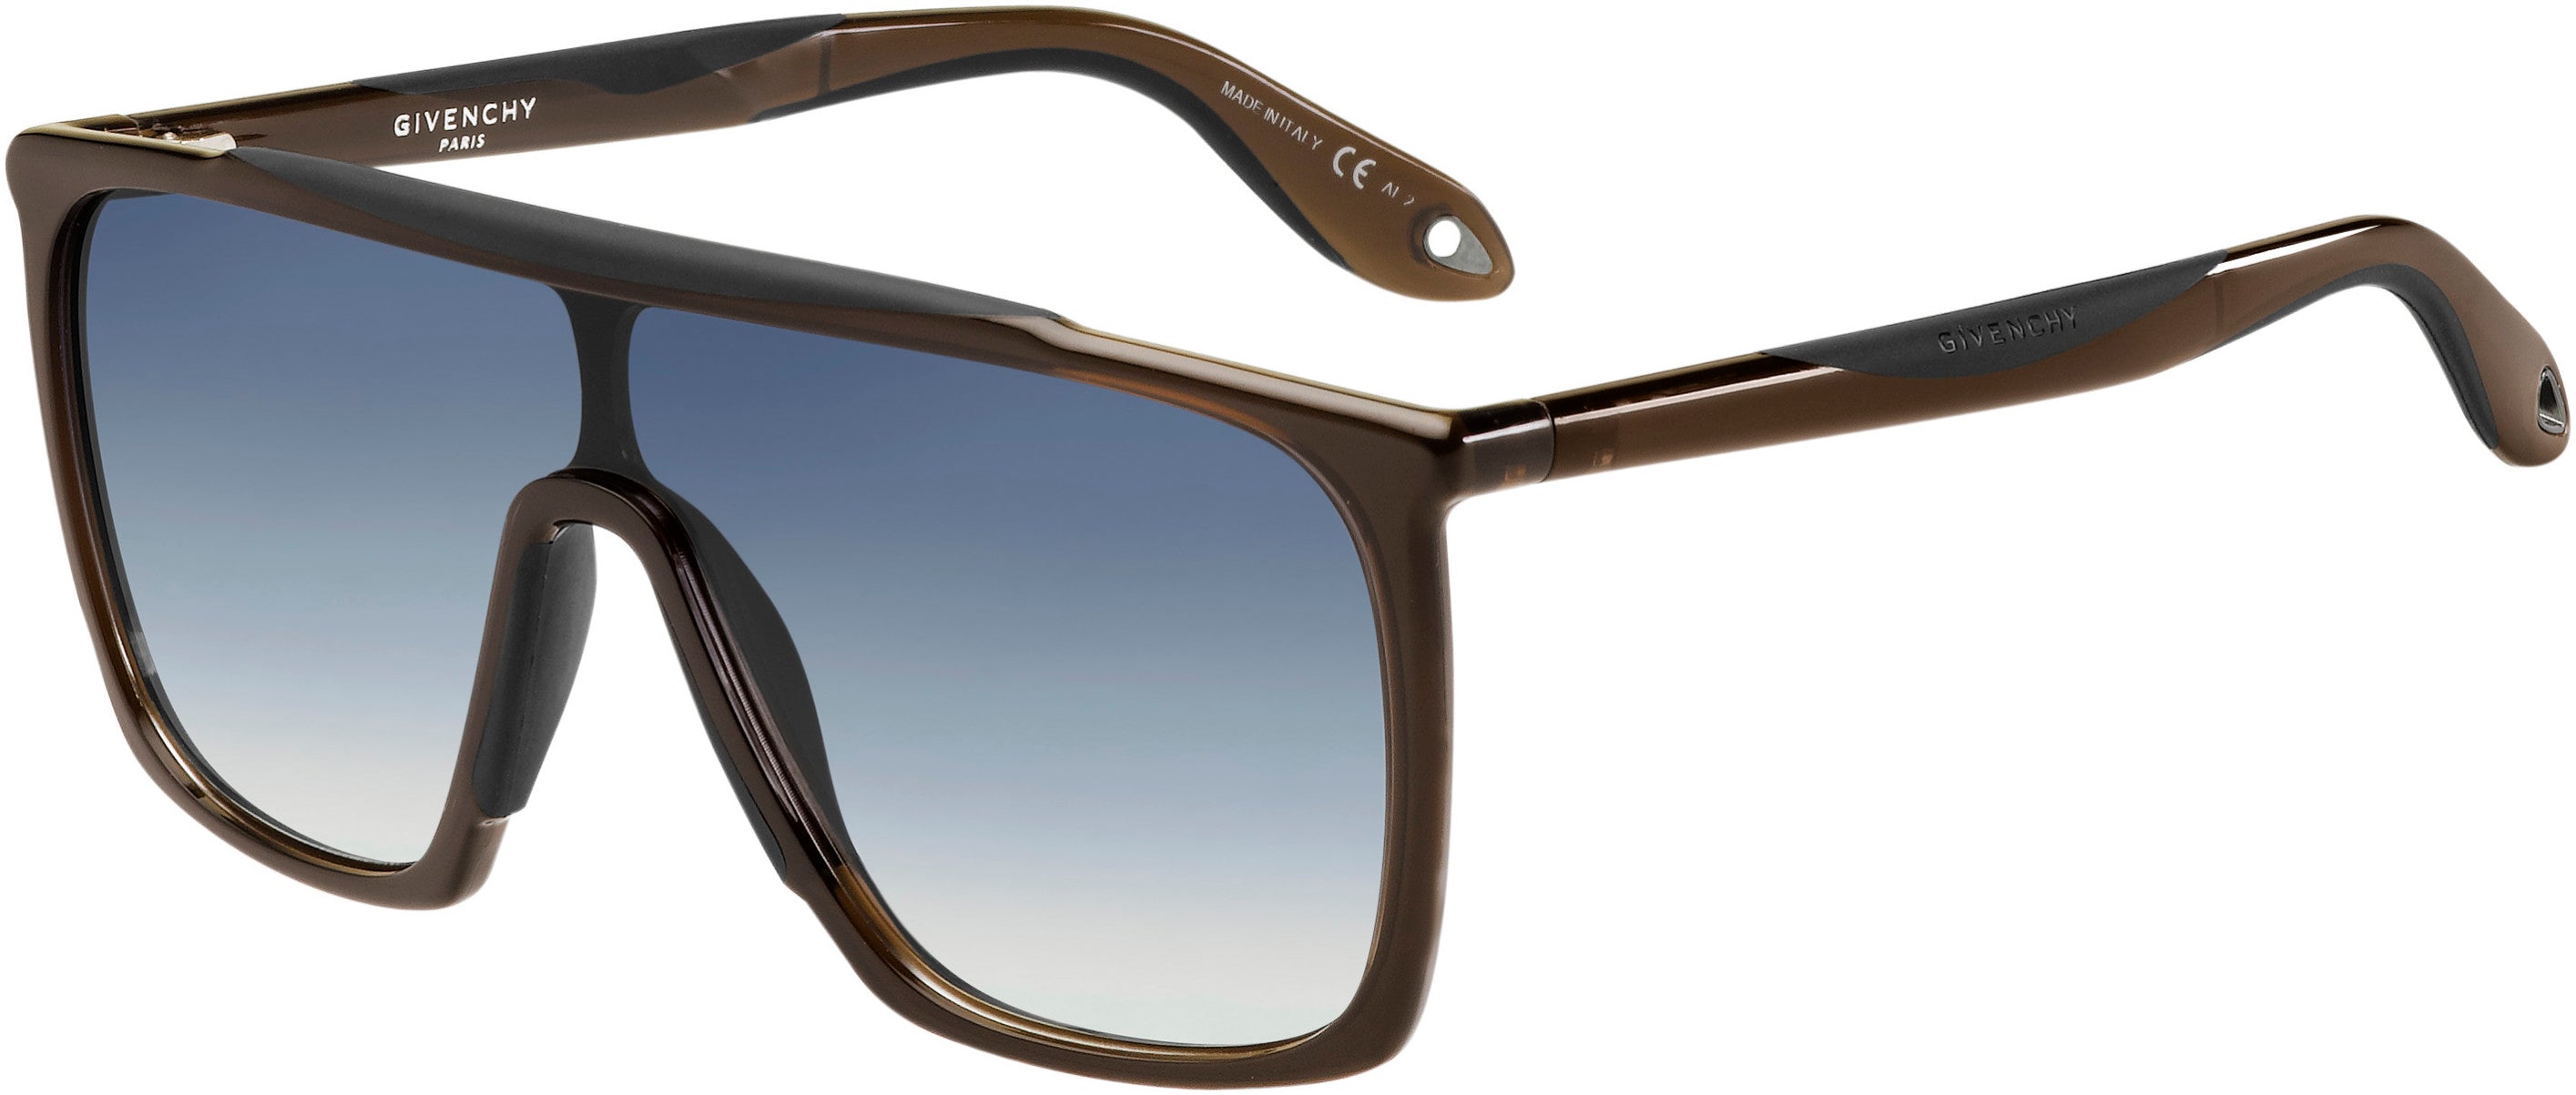  Givenchy 7040/S Shield Sunglasses 0TIR-0TIR  Brown Black (IT Blue Gradient)